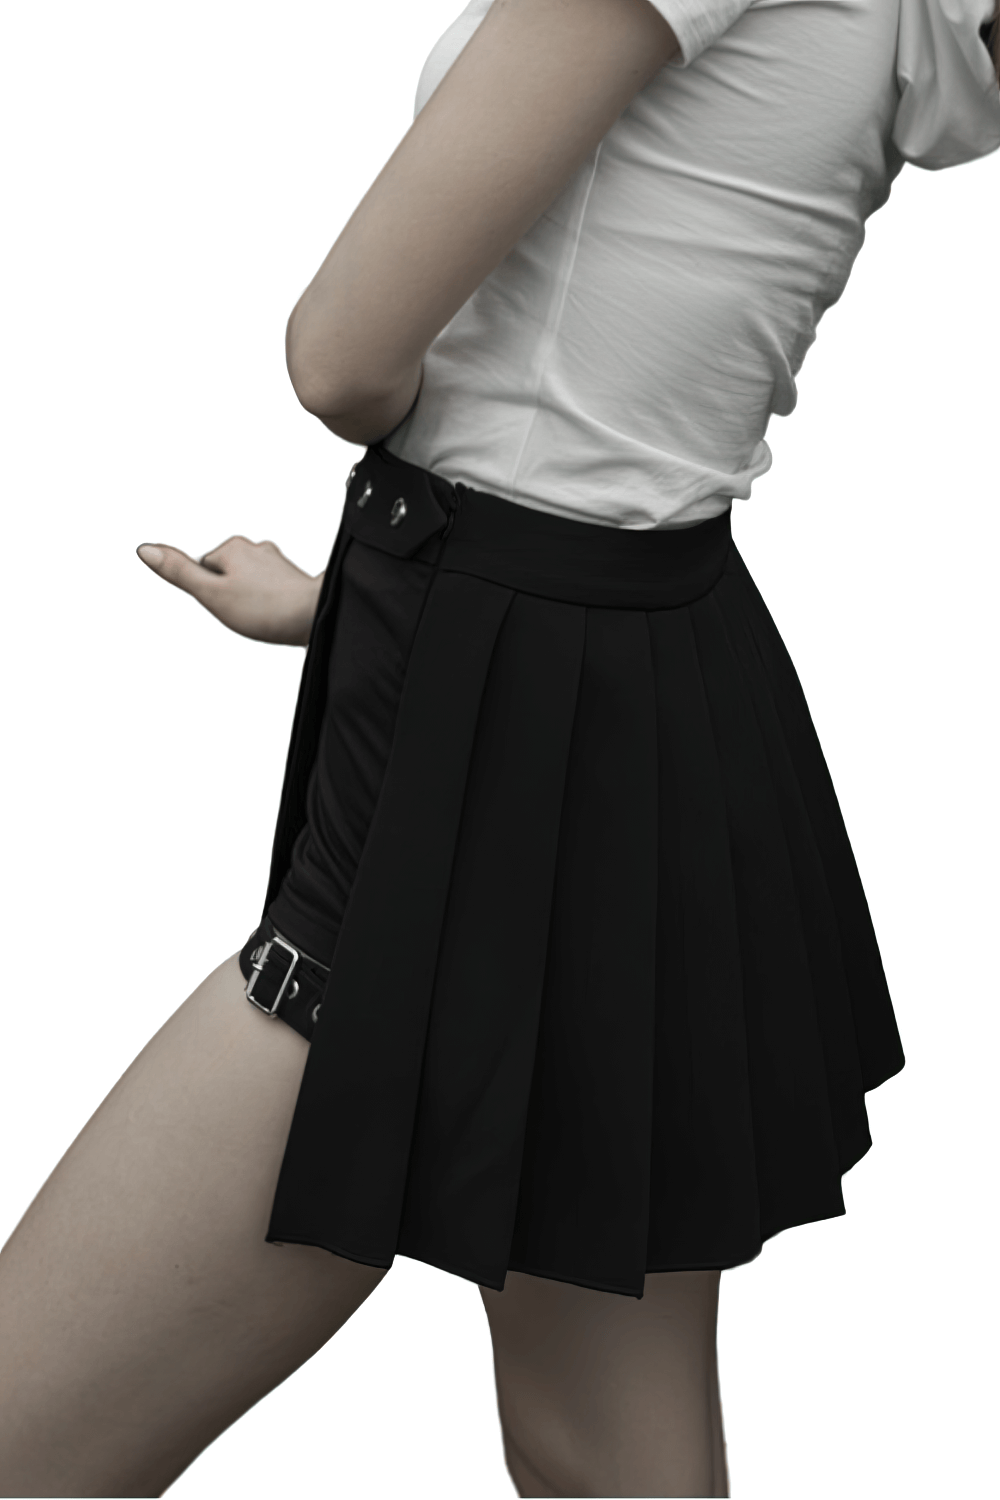 Gothic Punk Plaid Mini Skirt Asym Falsies Two-Piece